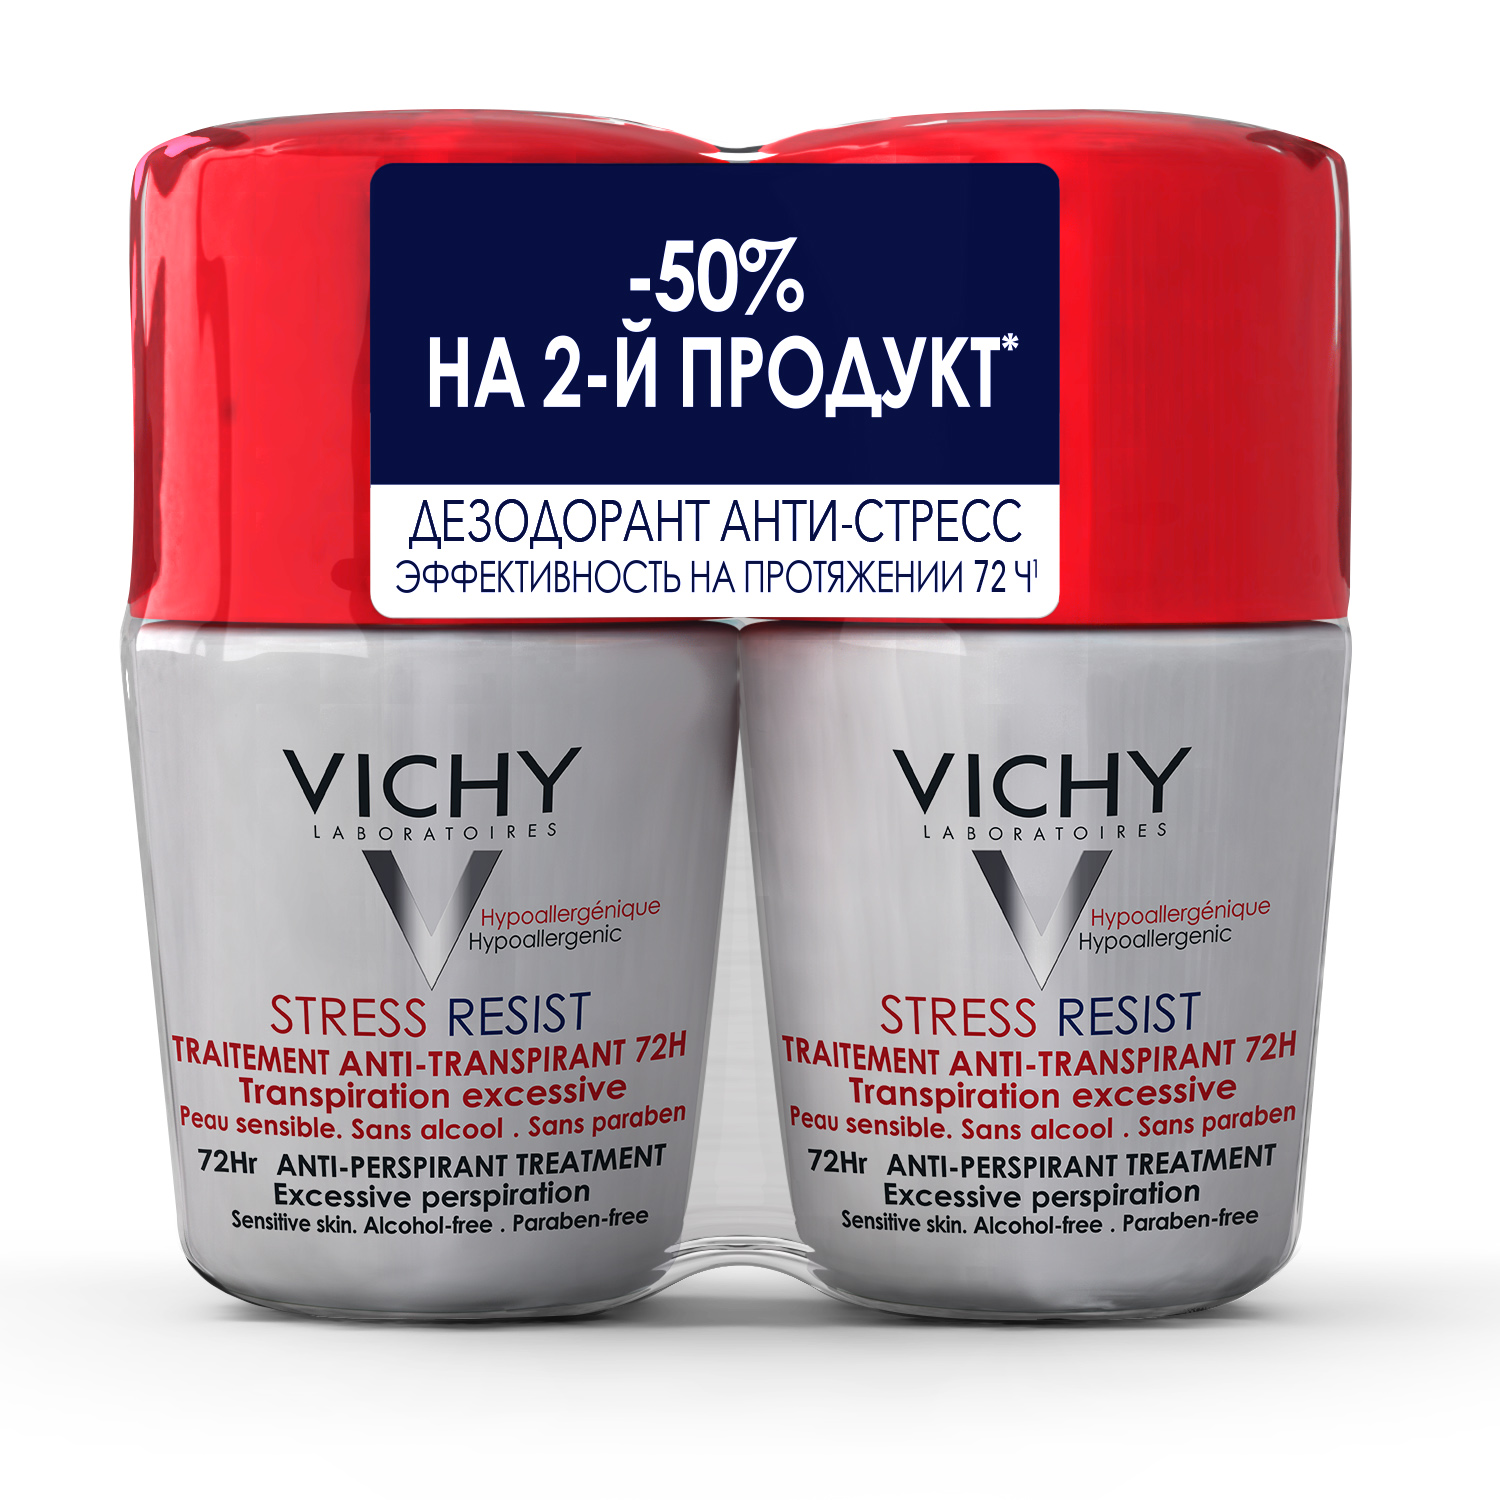 Виши дезодорант анти-стресс 72 часа фл. 50мл набор из 2-х продуктов со скидкой - 50% на второй продукт (vru05107)